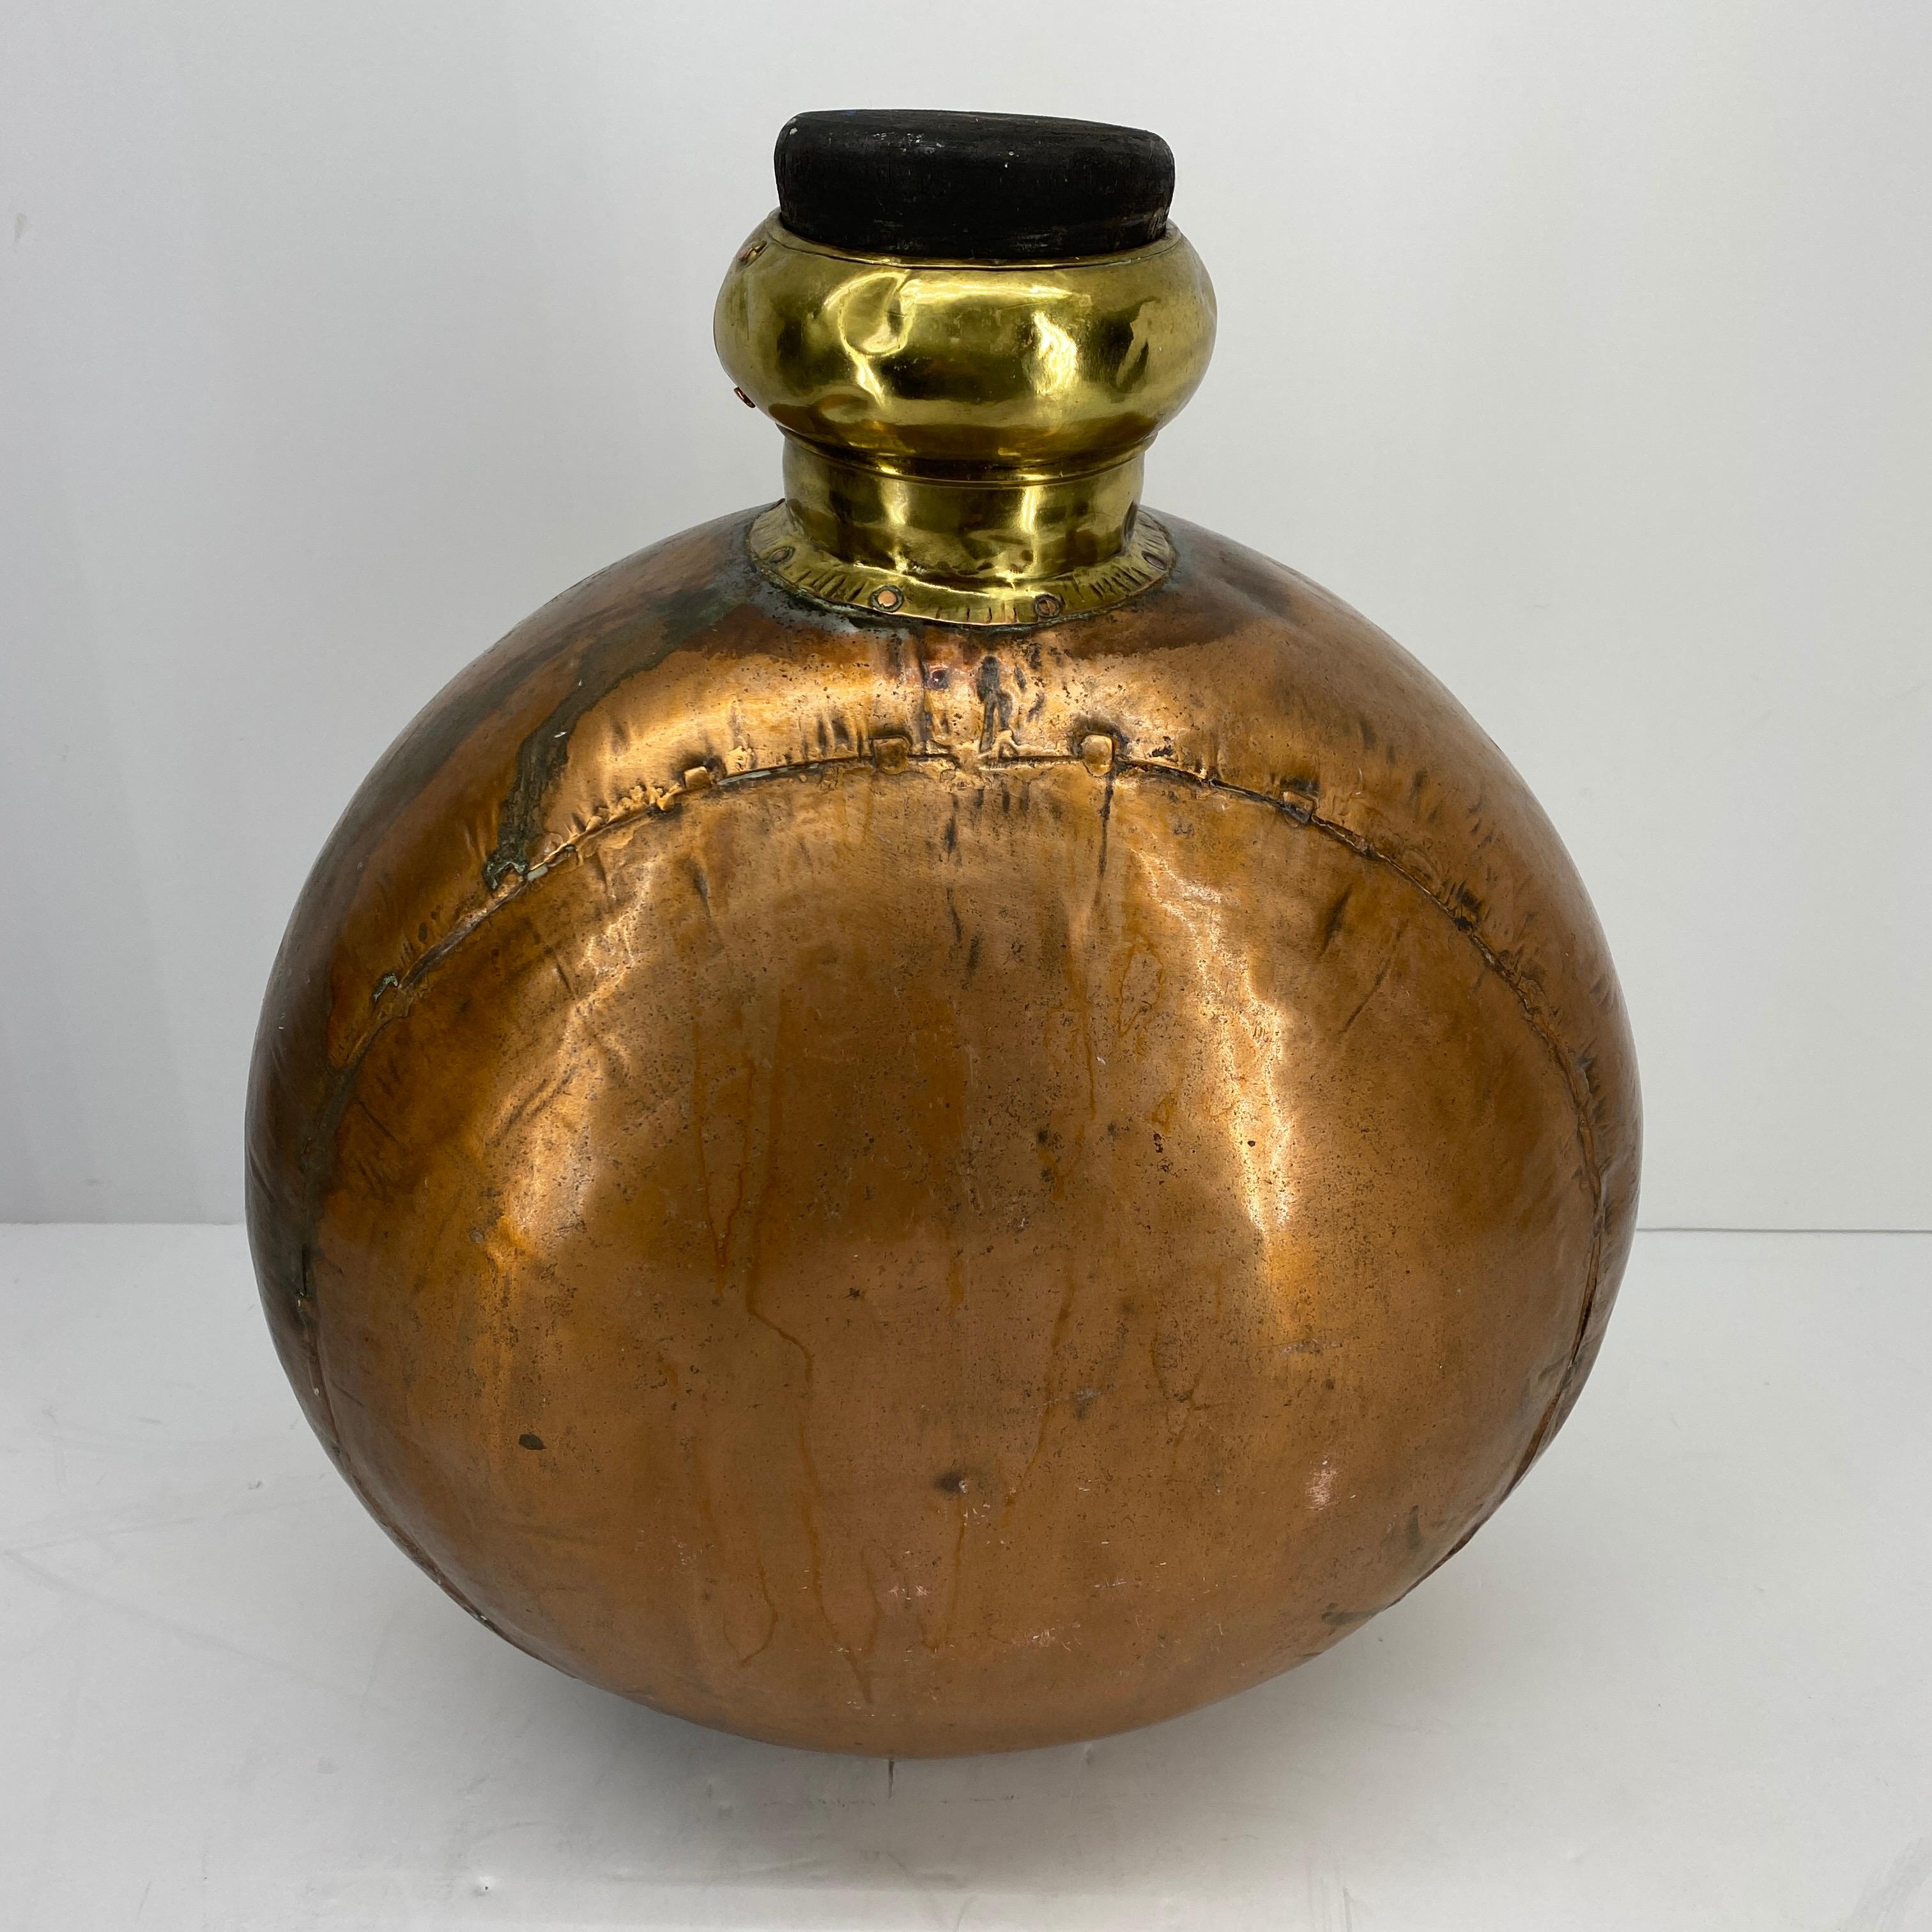 Huge vintage copper and brass decorative bottle with black wooden top.